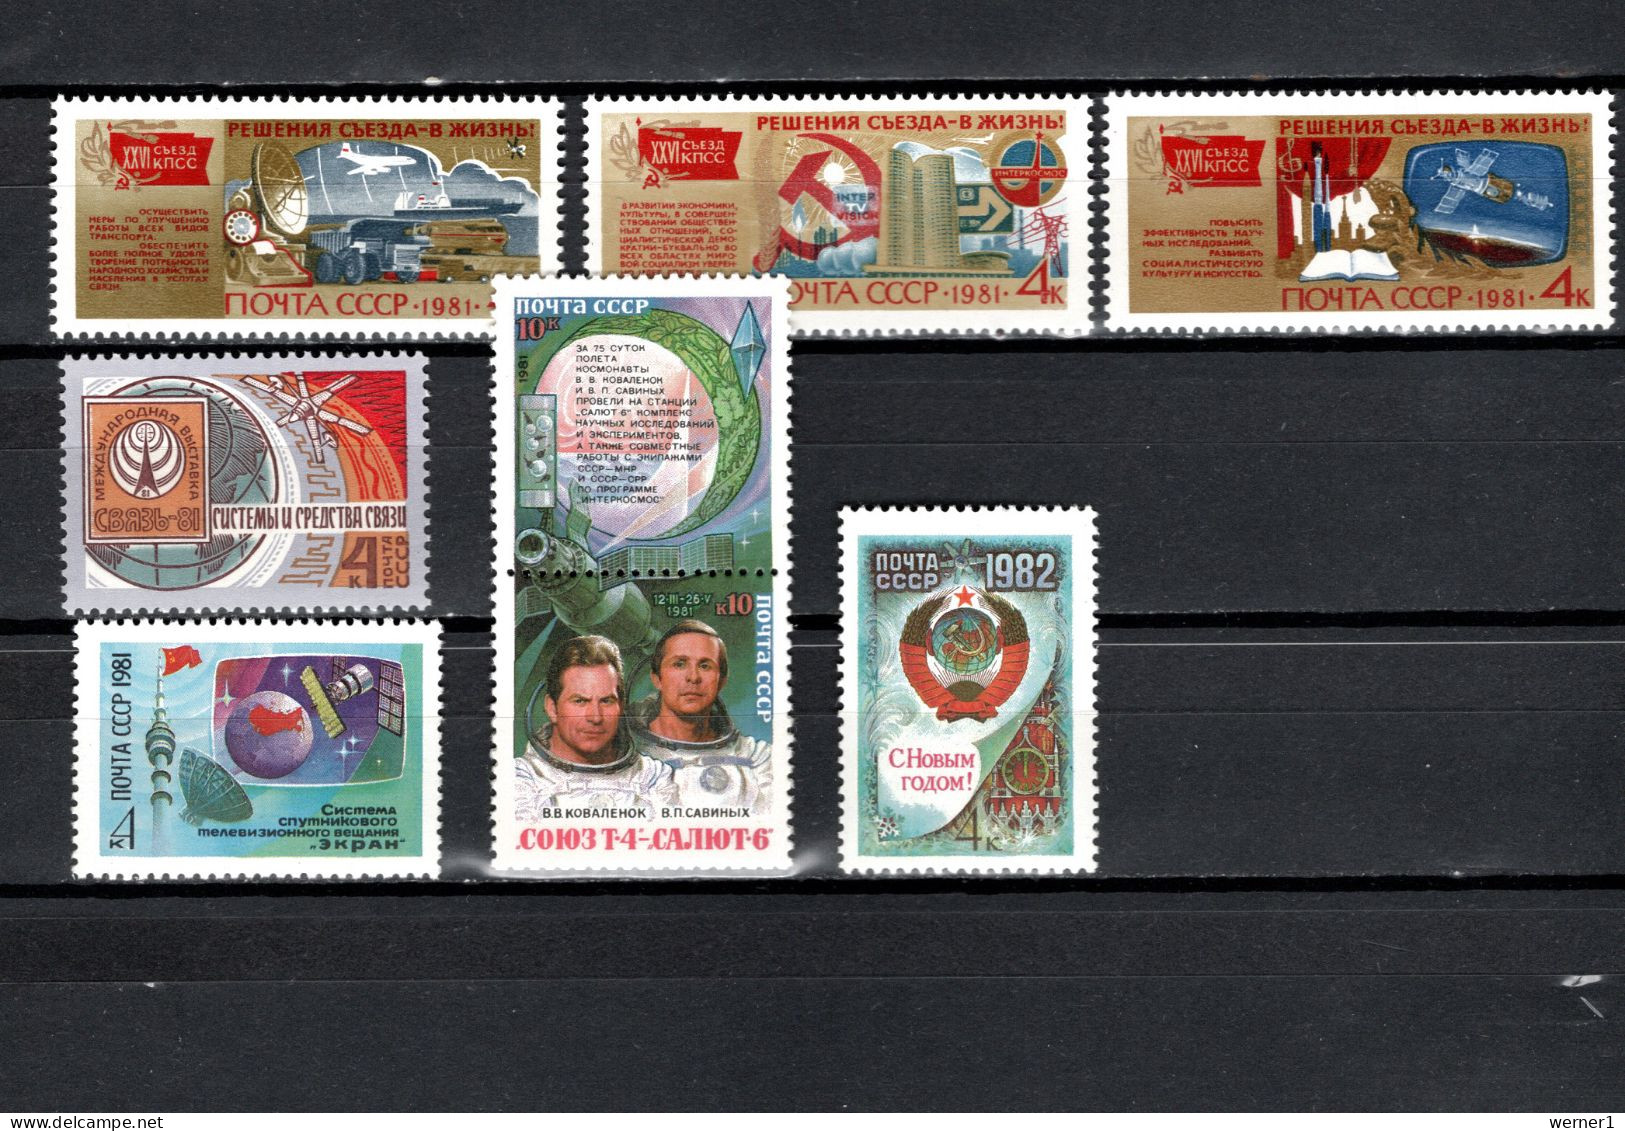 USSR Russia 1981 Space, Communist Party Congress, SWJAS '81, Ekran Satellite, Saljut 6, New Year 8 Stamps MNH - UdSSR